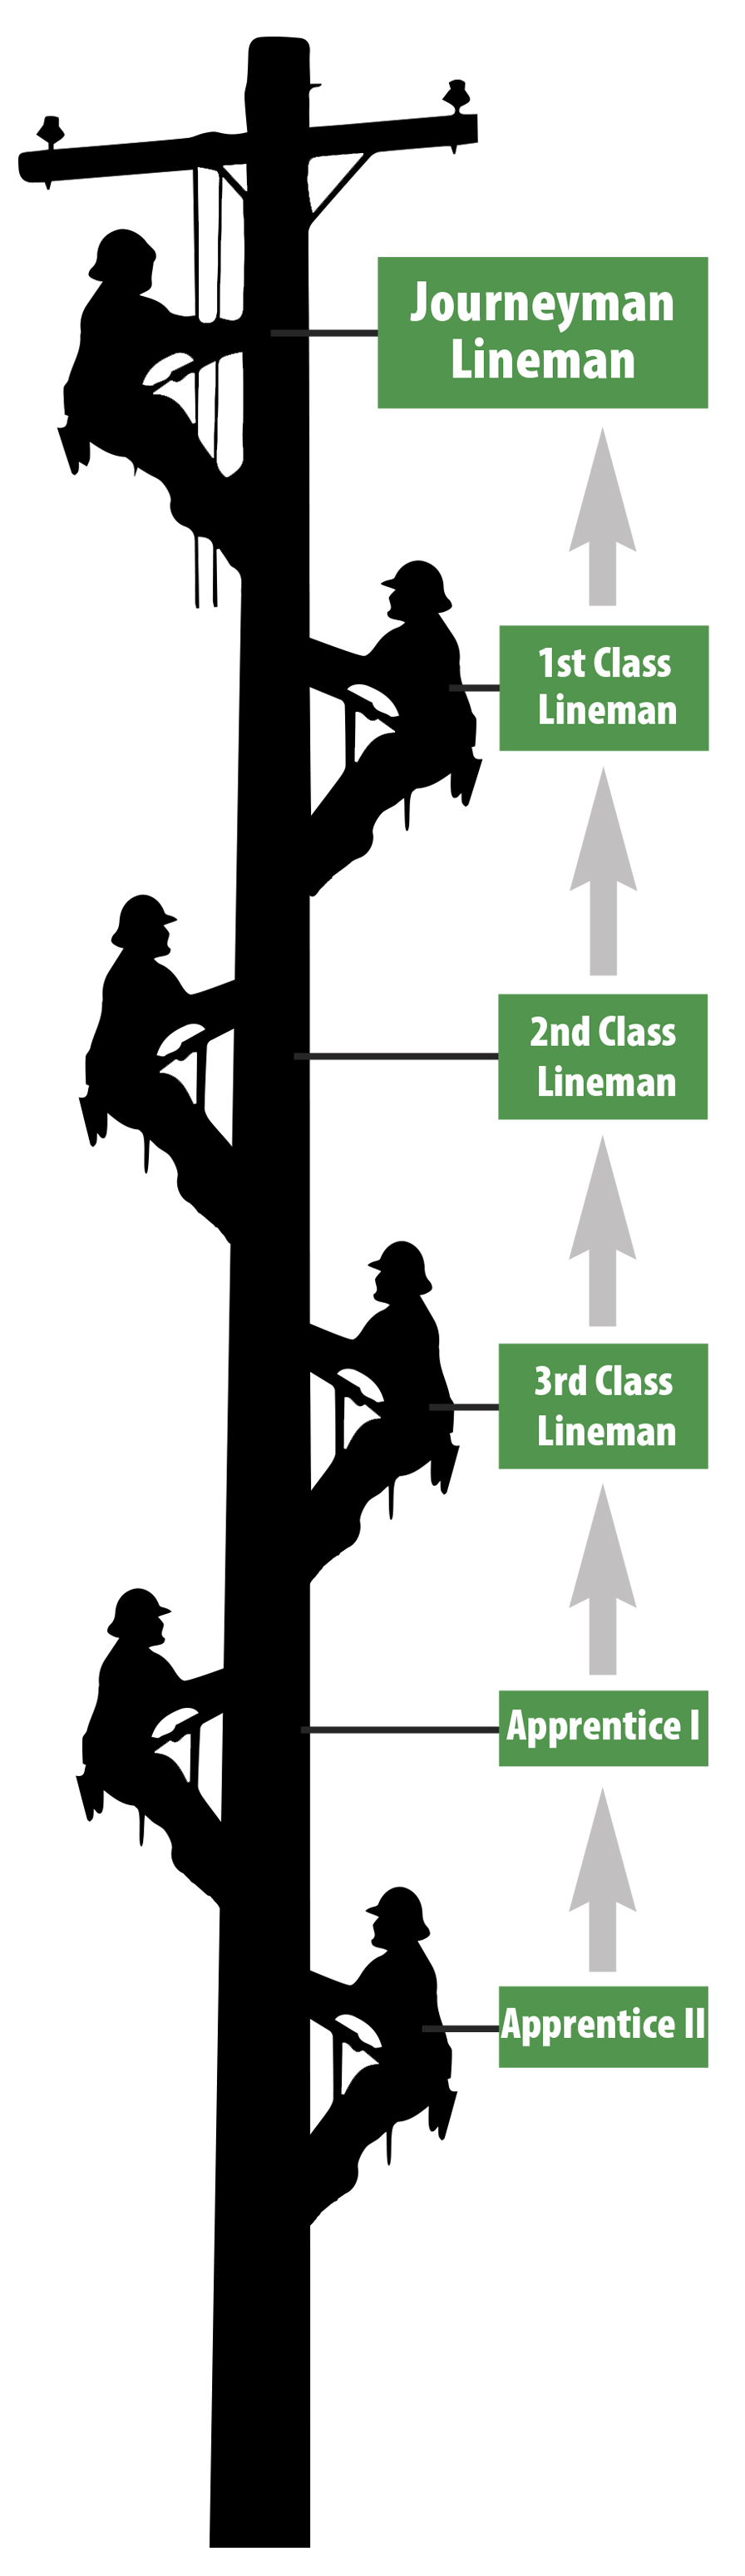 lineman-apprenticeship-program